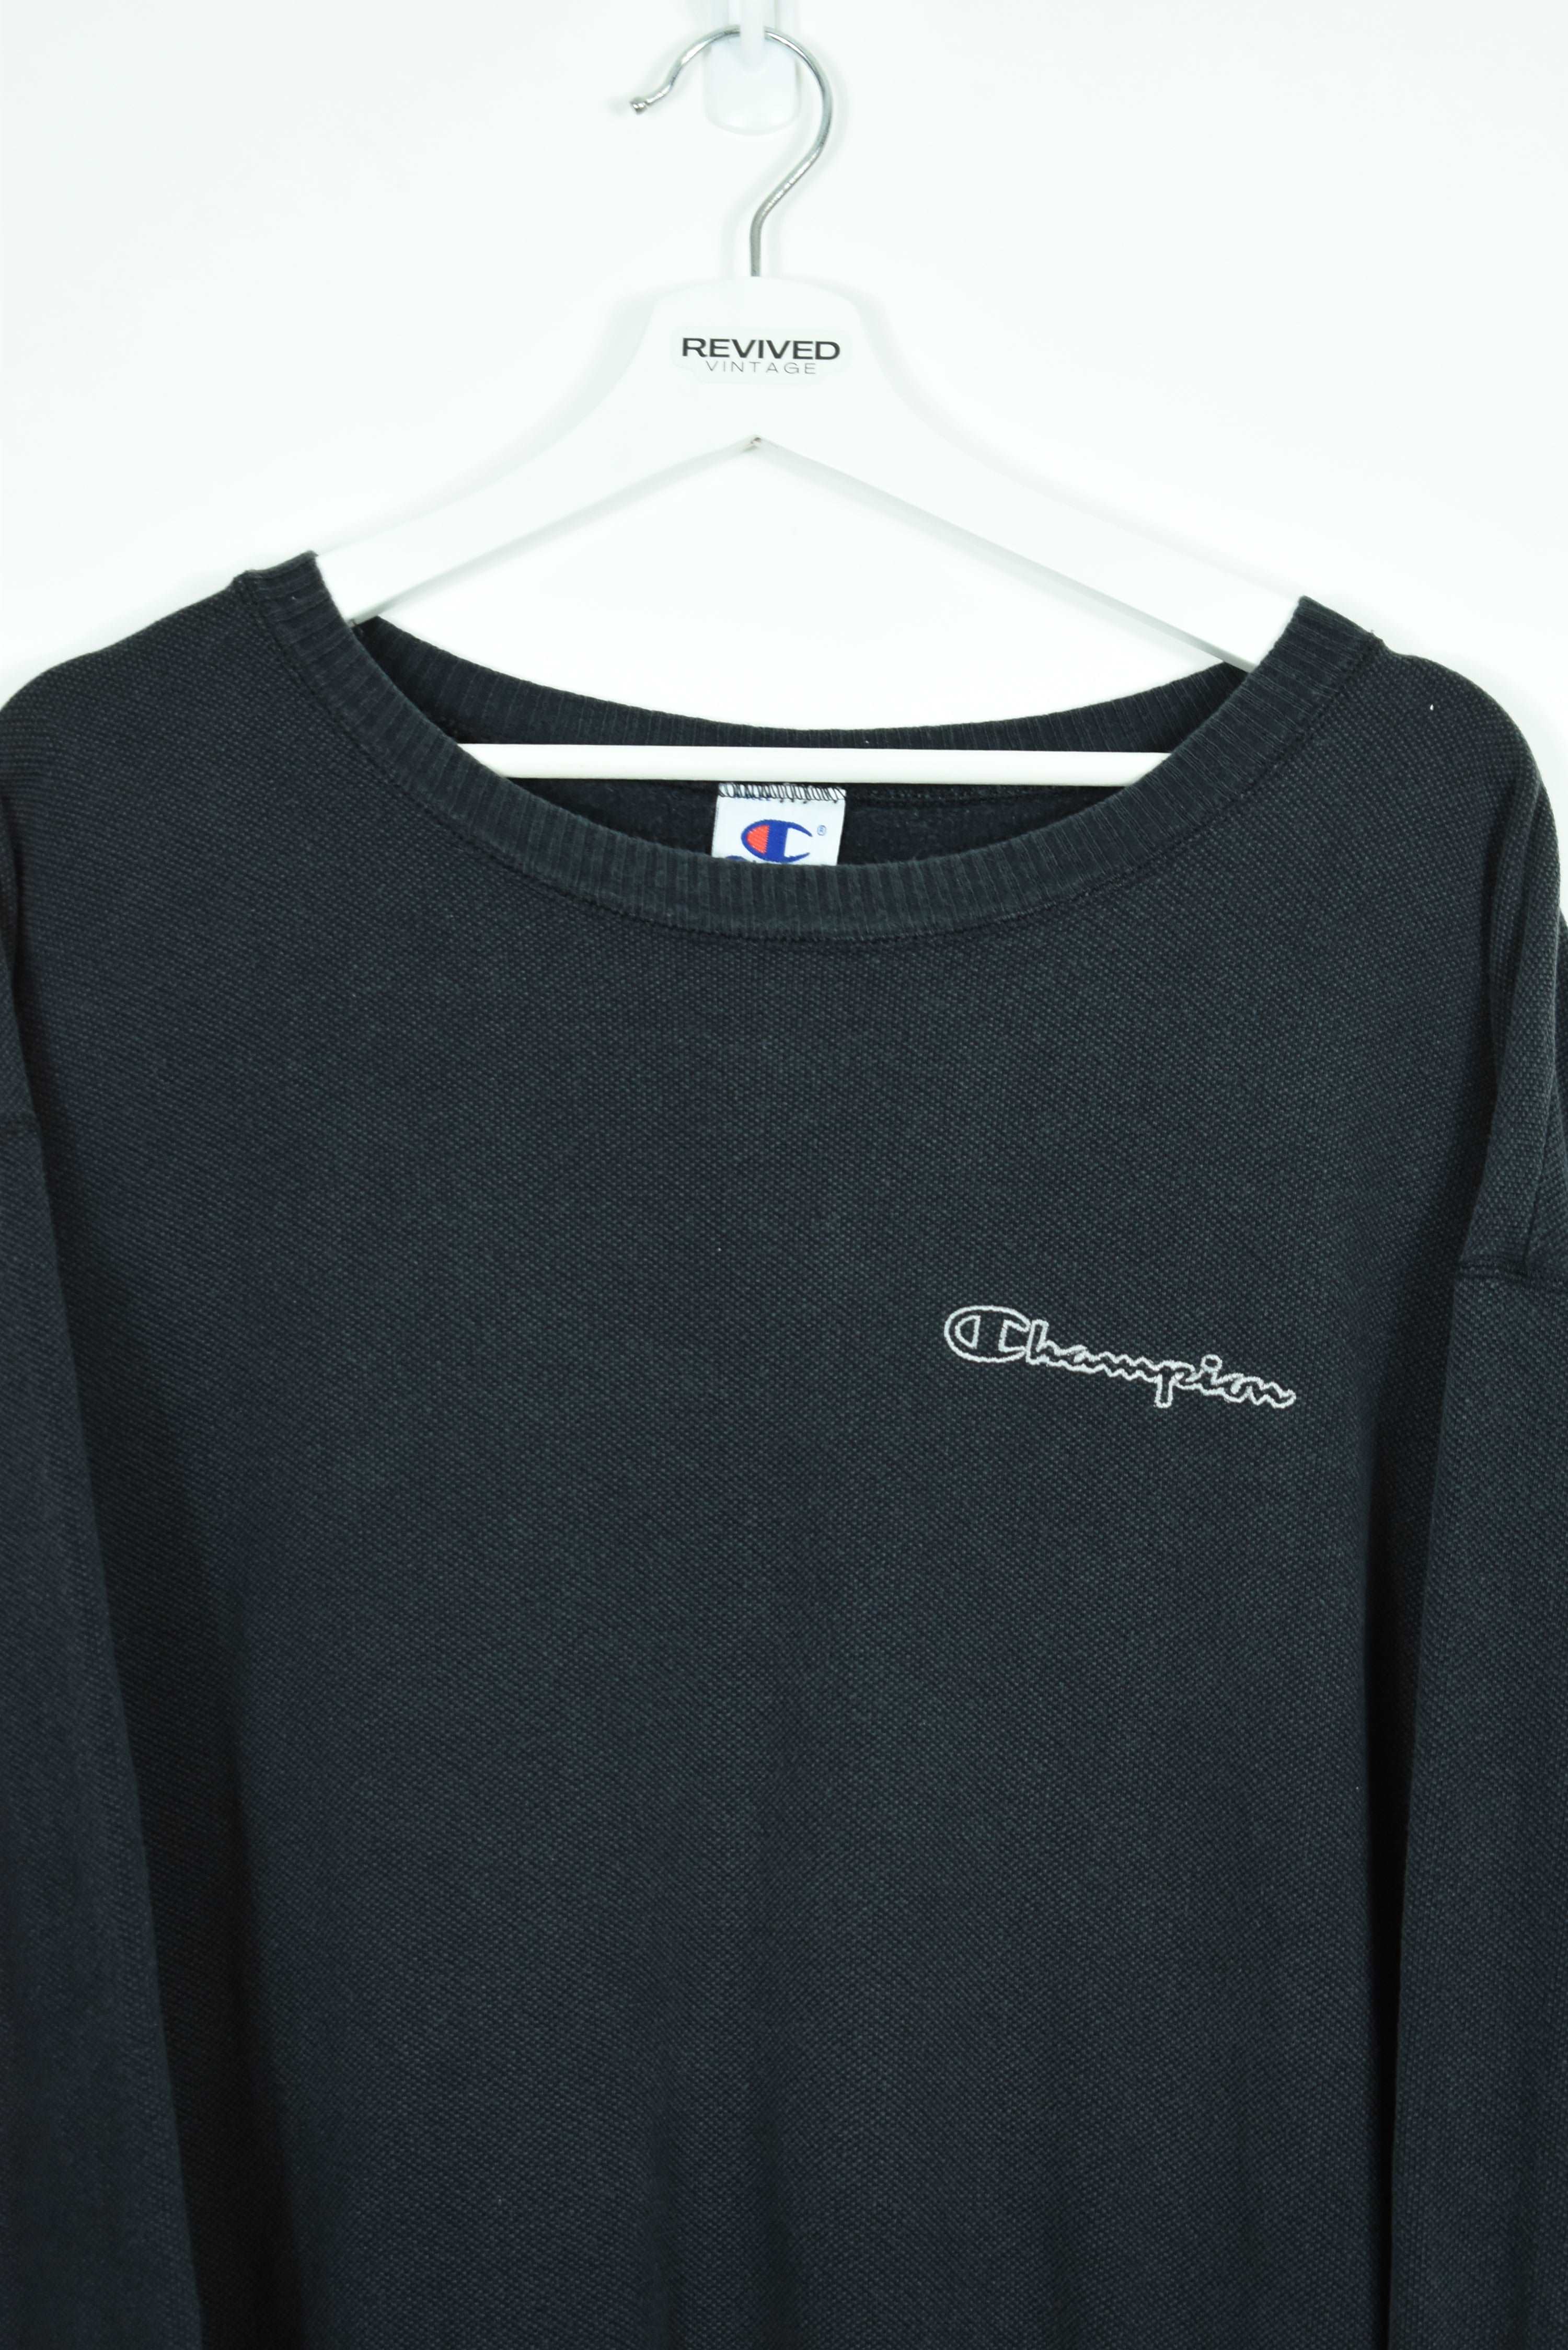 Vintage Champion Woven Sweatshirt XL